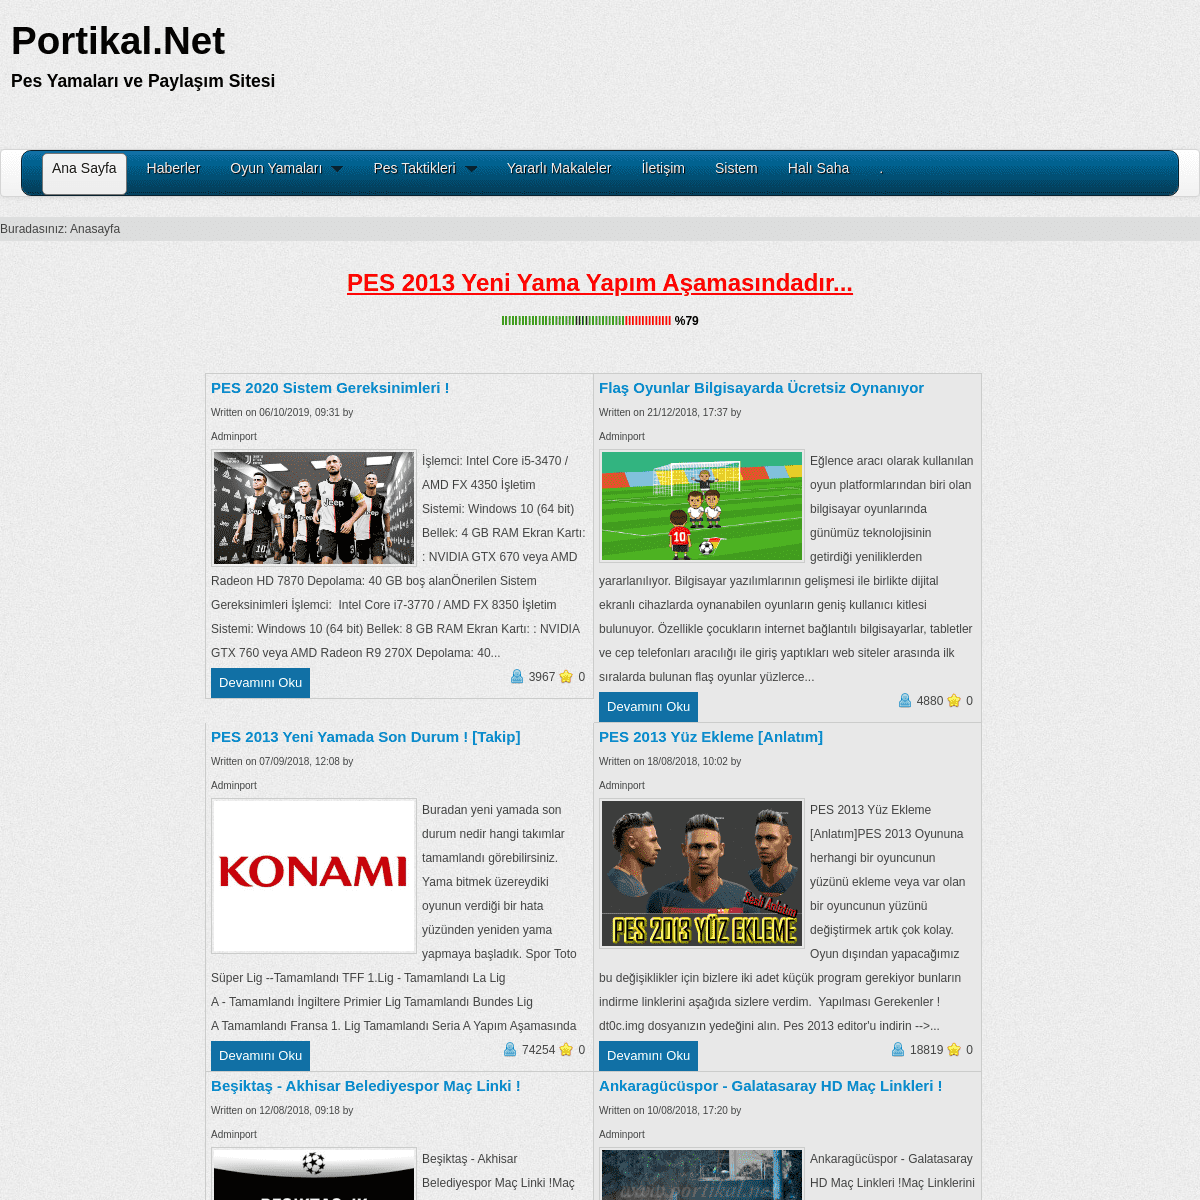 A complete backup of portikal.net